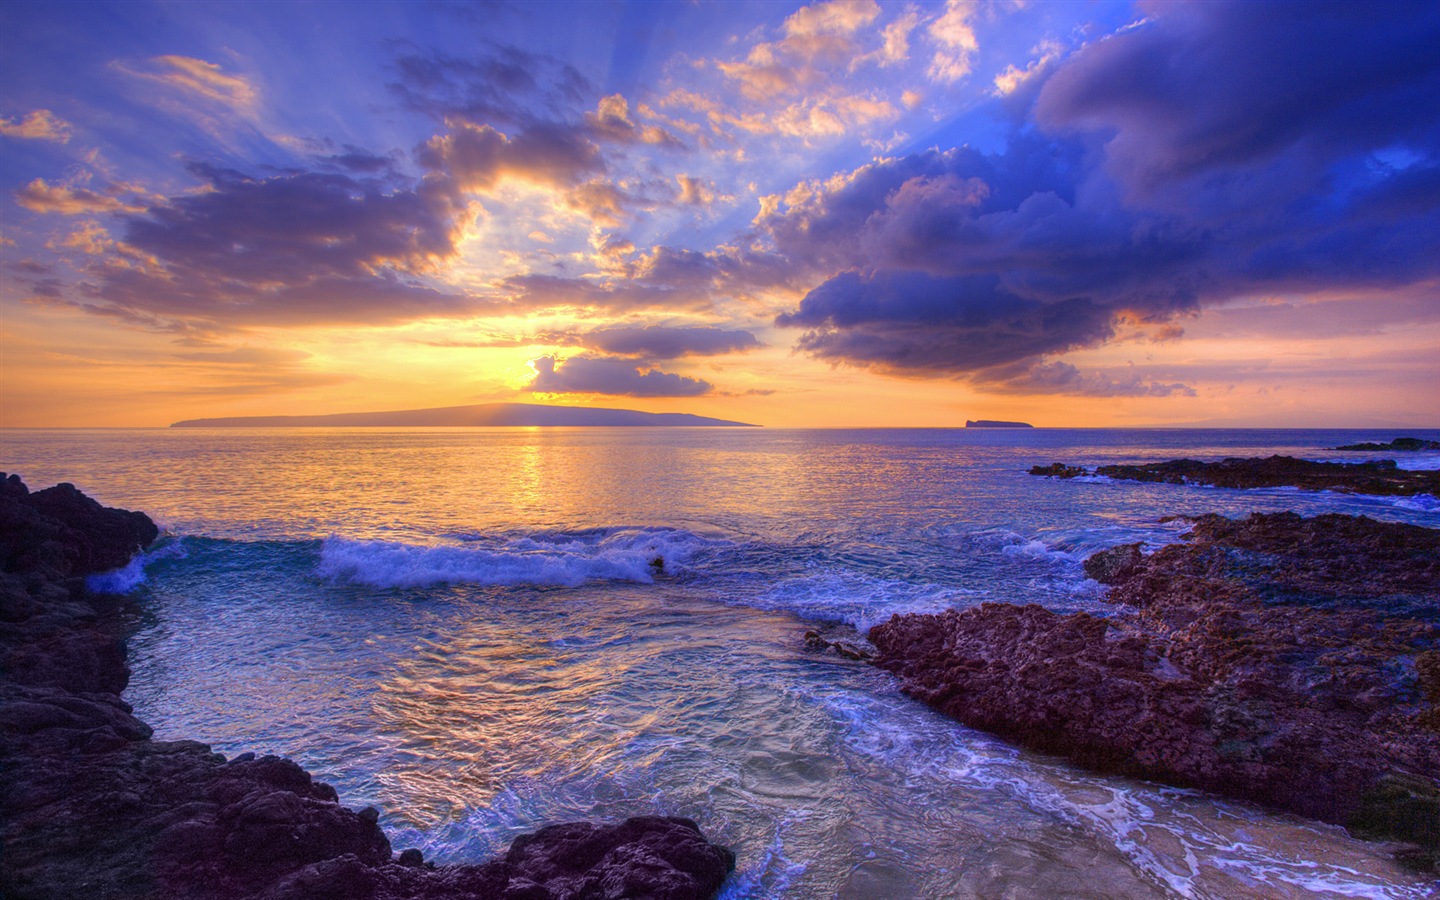 Windows 8 theme wallpaper: Beach sunrise and sunset views #2 - 1440x900